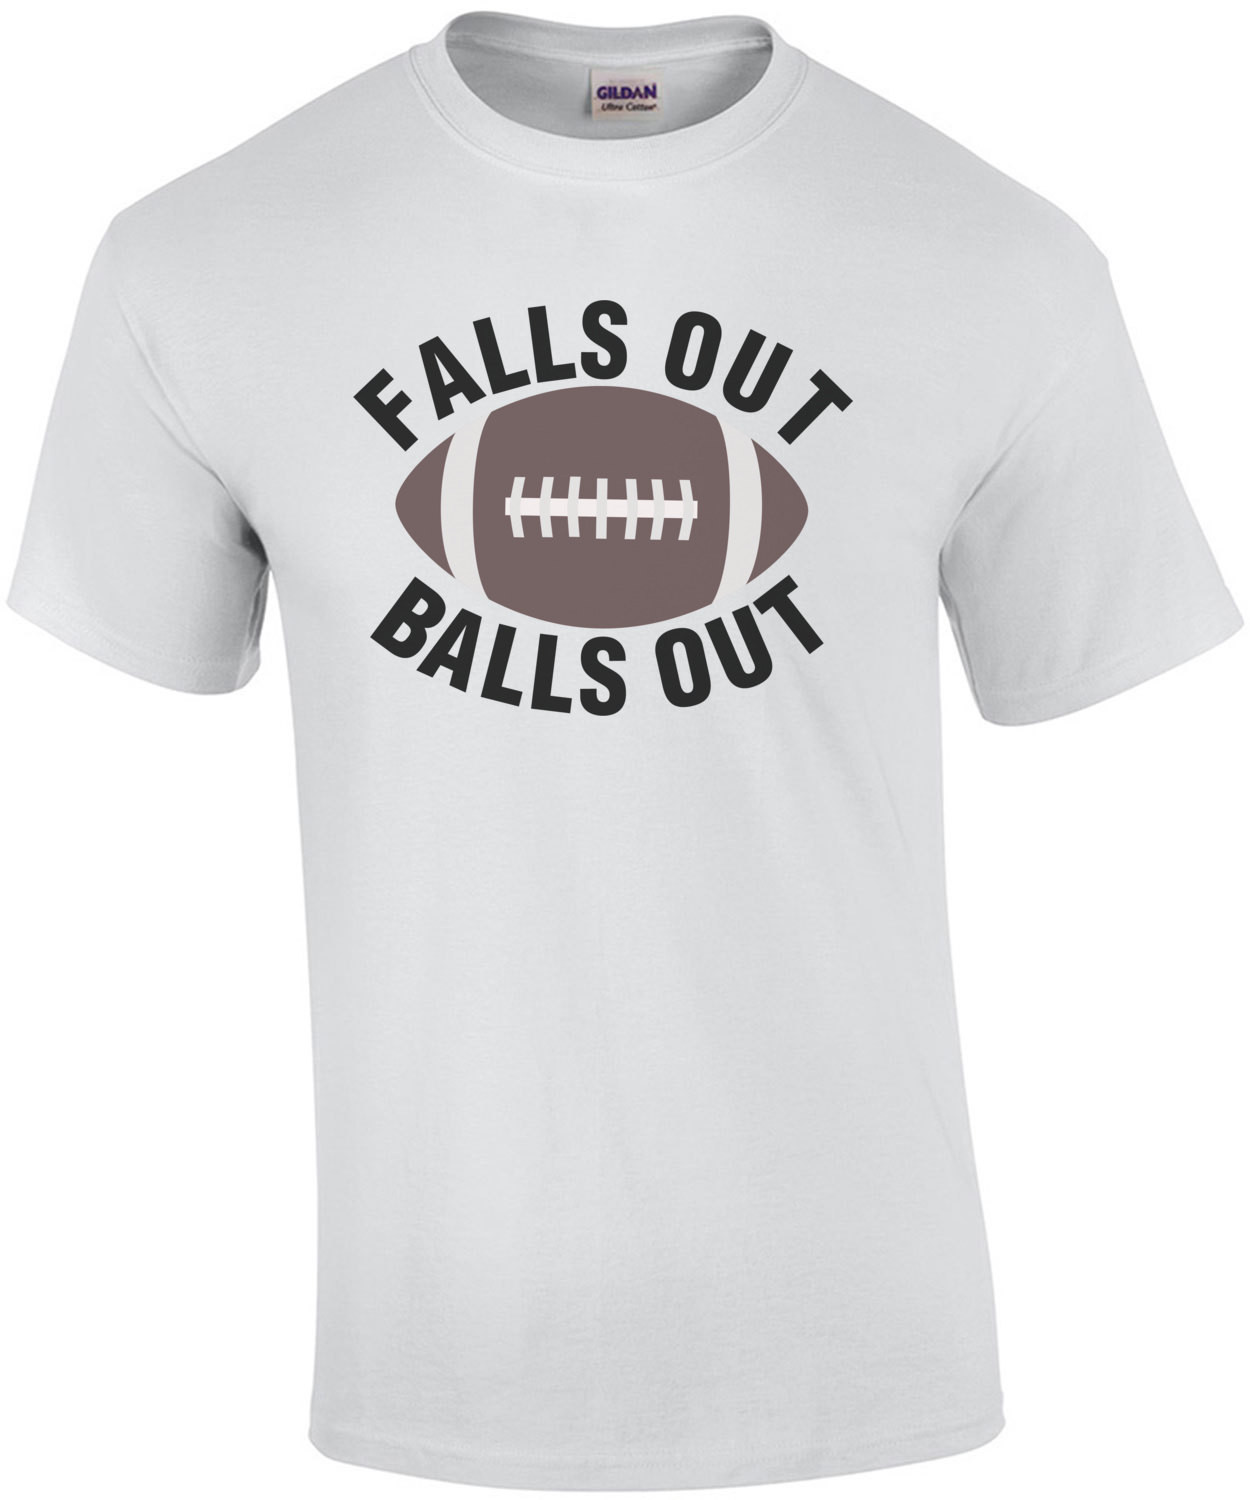 Falls Out Balls Out Football Shirt